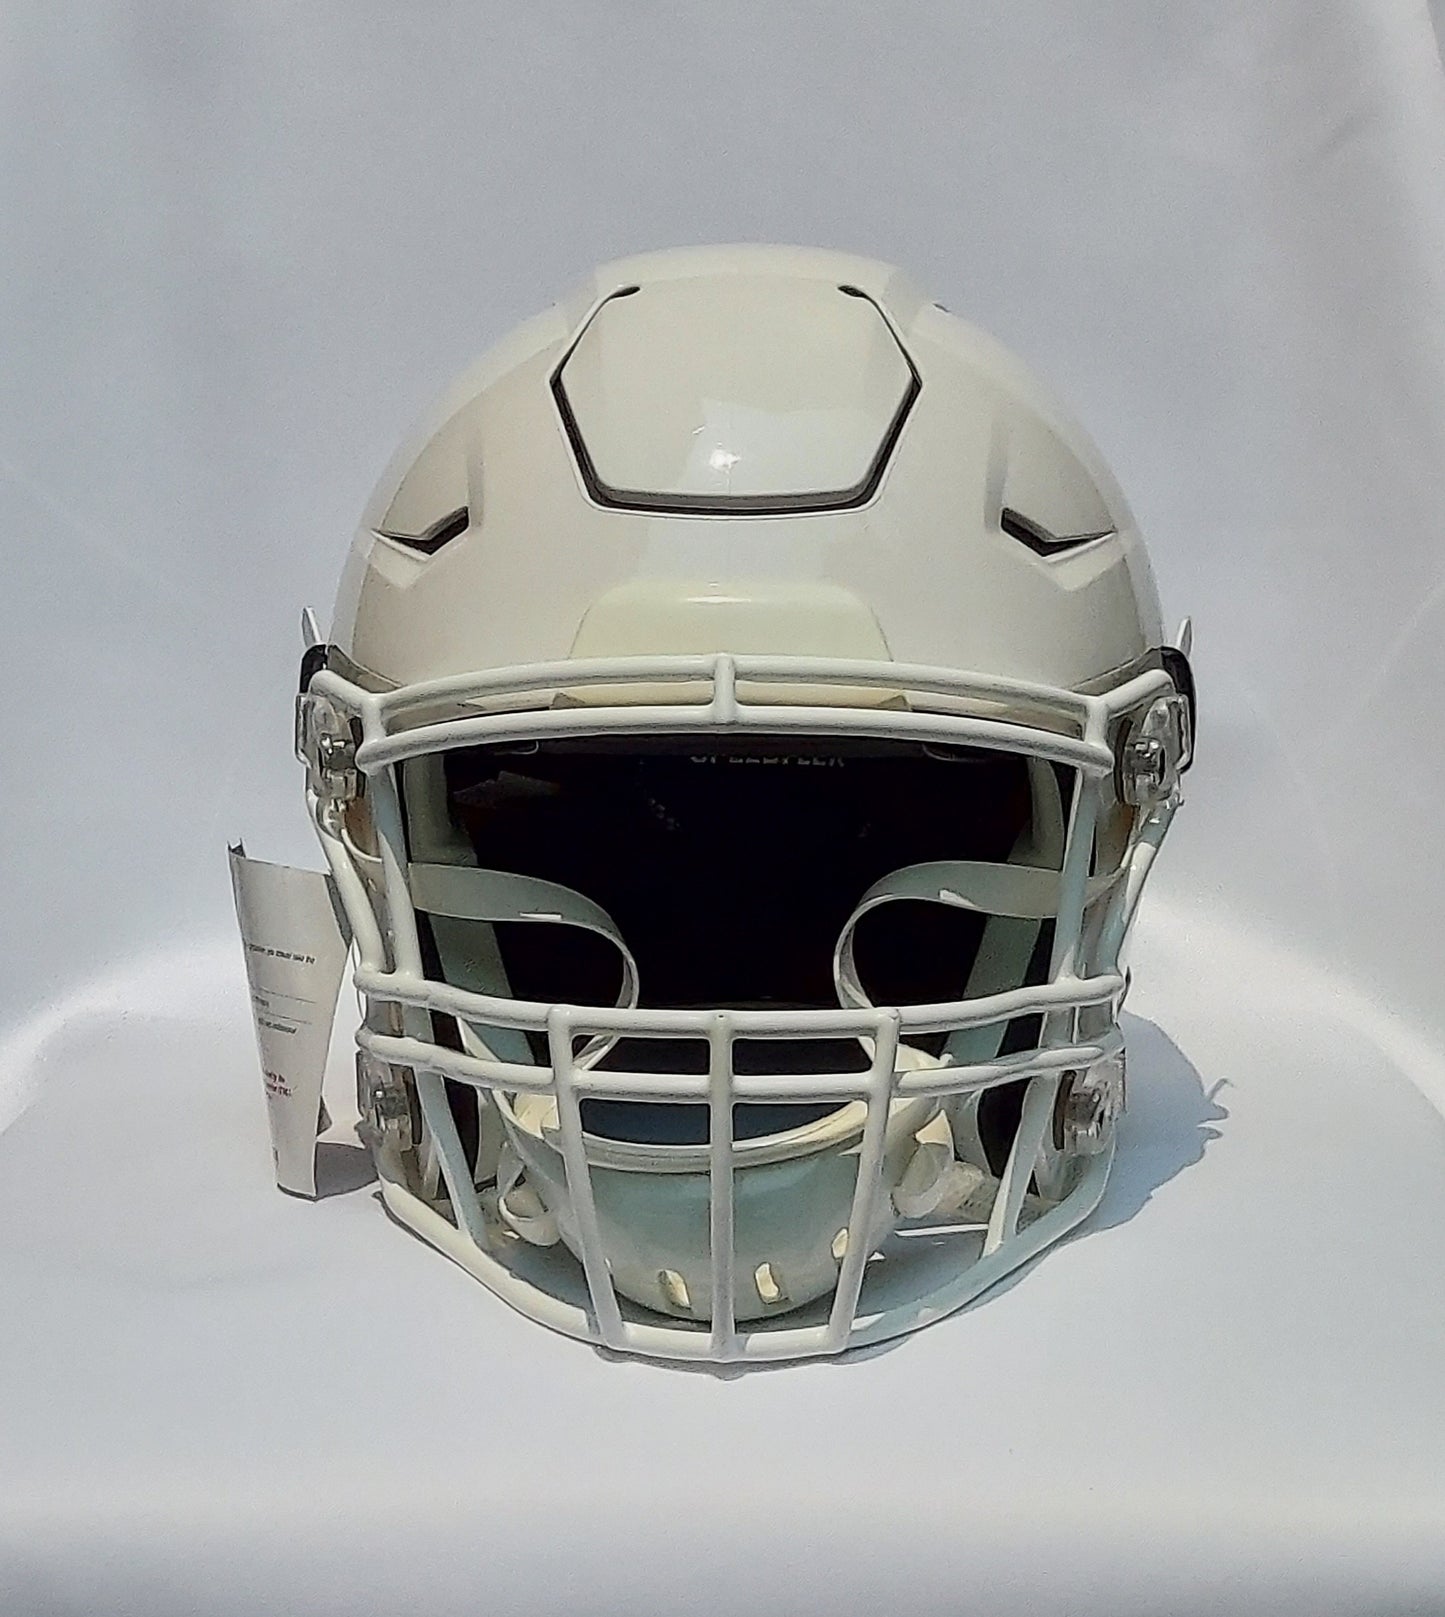 Riddell SpeedFlex Adult Football Helmet